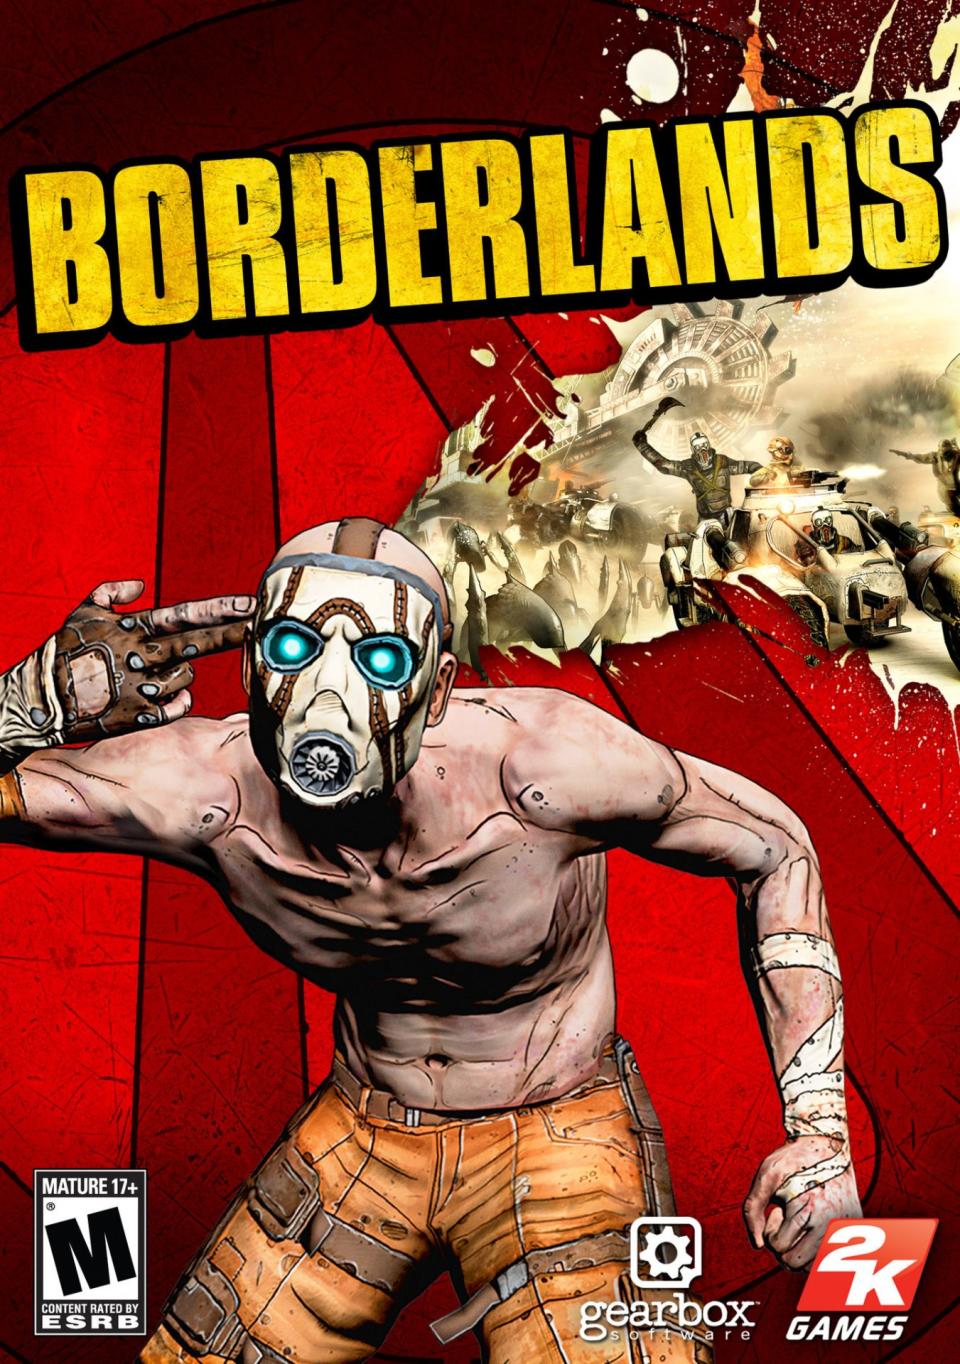 Borderlands video game art depicting a shirtless man wearing orange pants and a mask